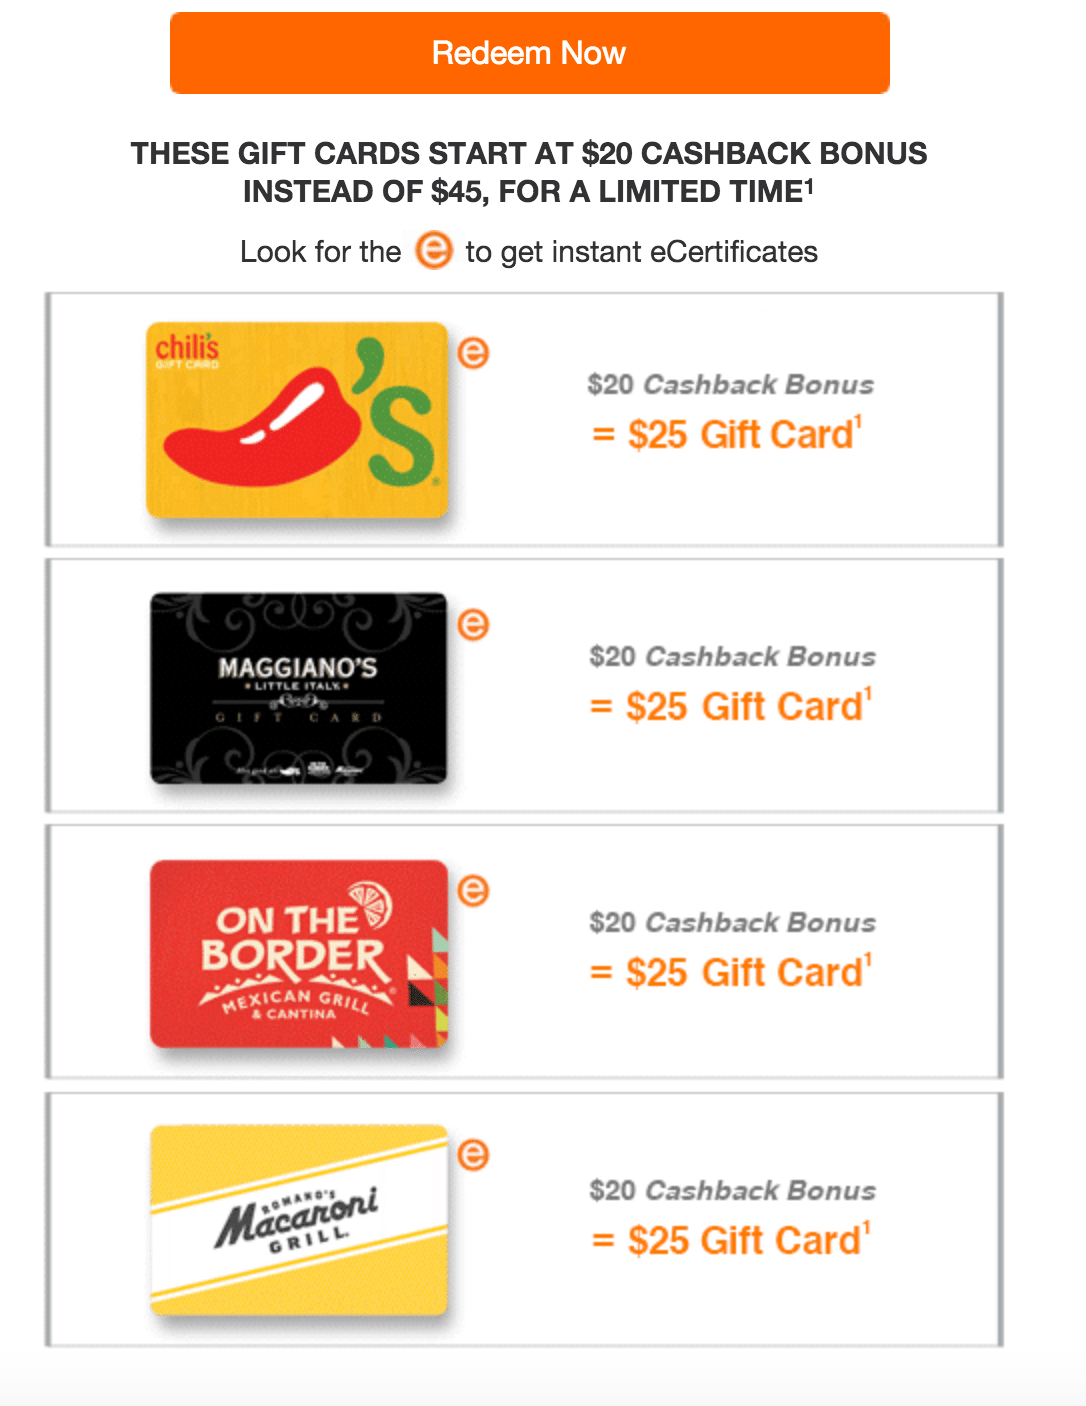 Effortless Exchange of Bulk Gift Cards with Cash Up Gift - Cashup_Gift -  Medium